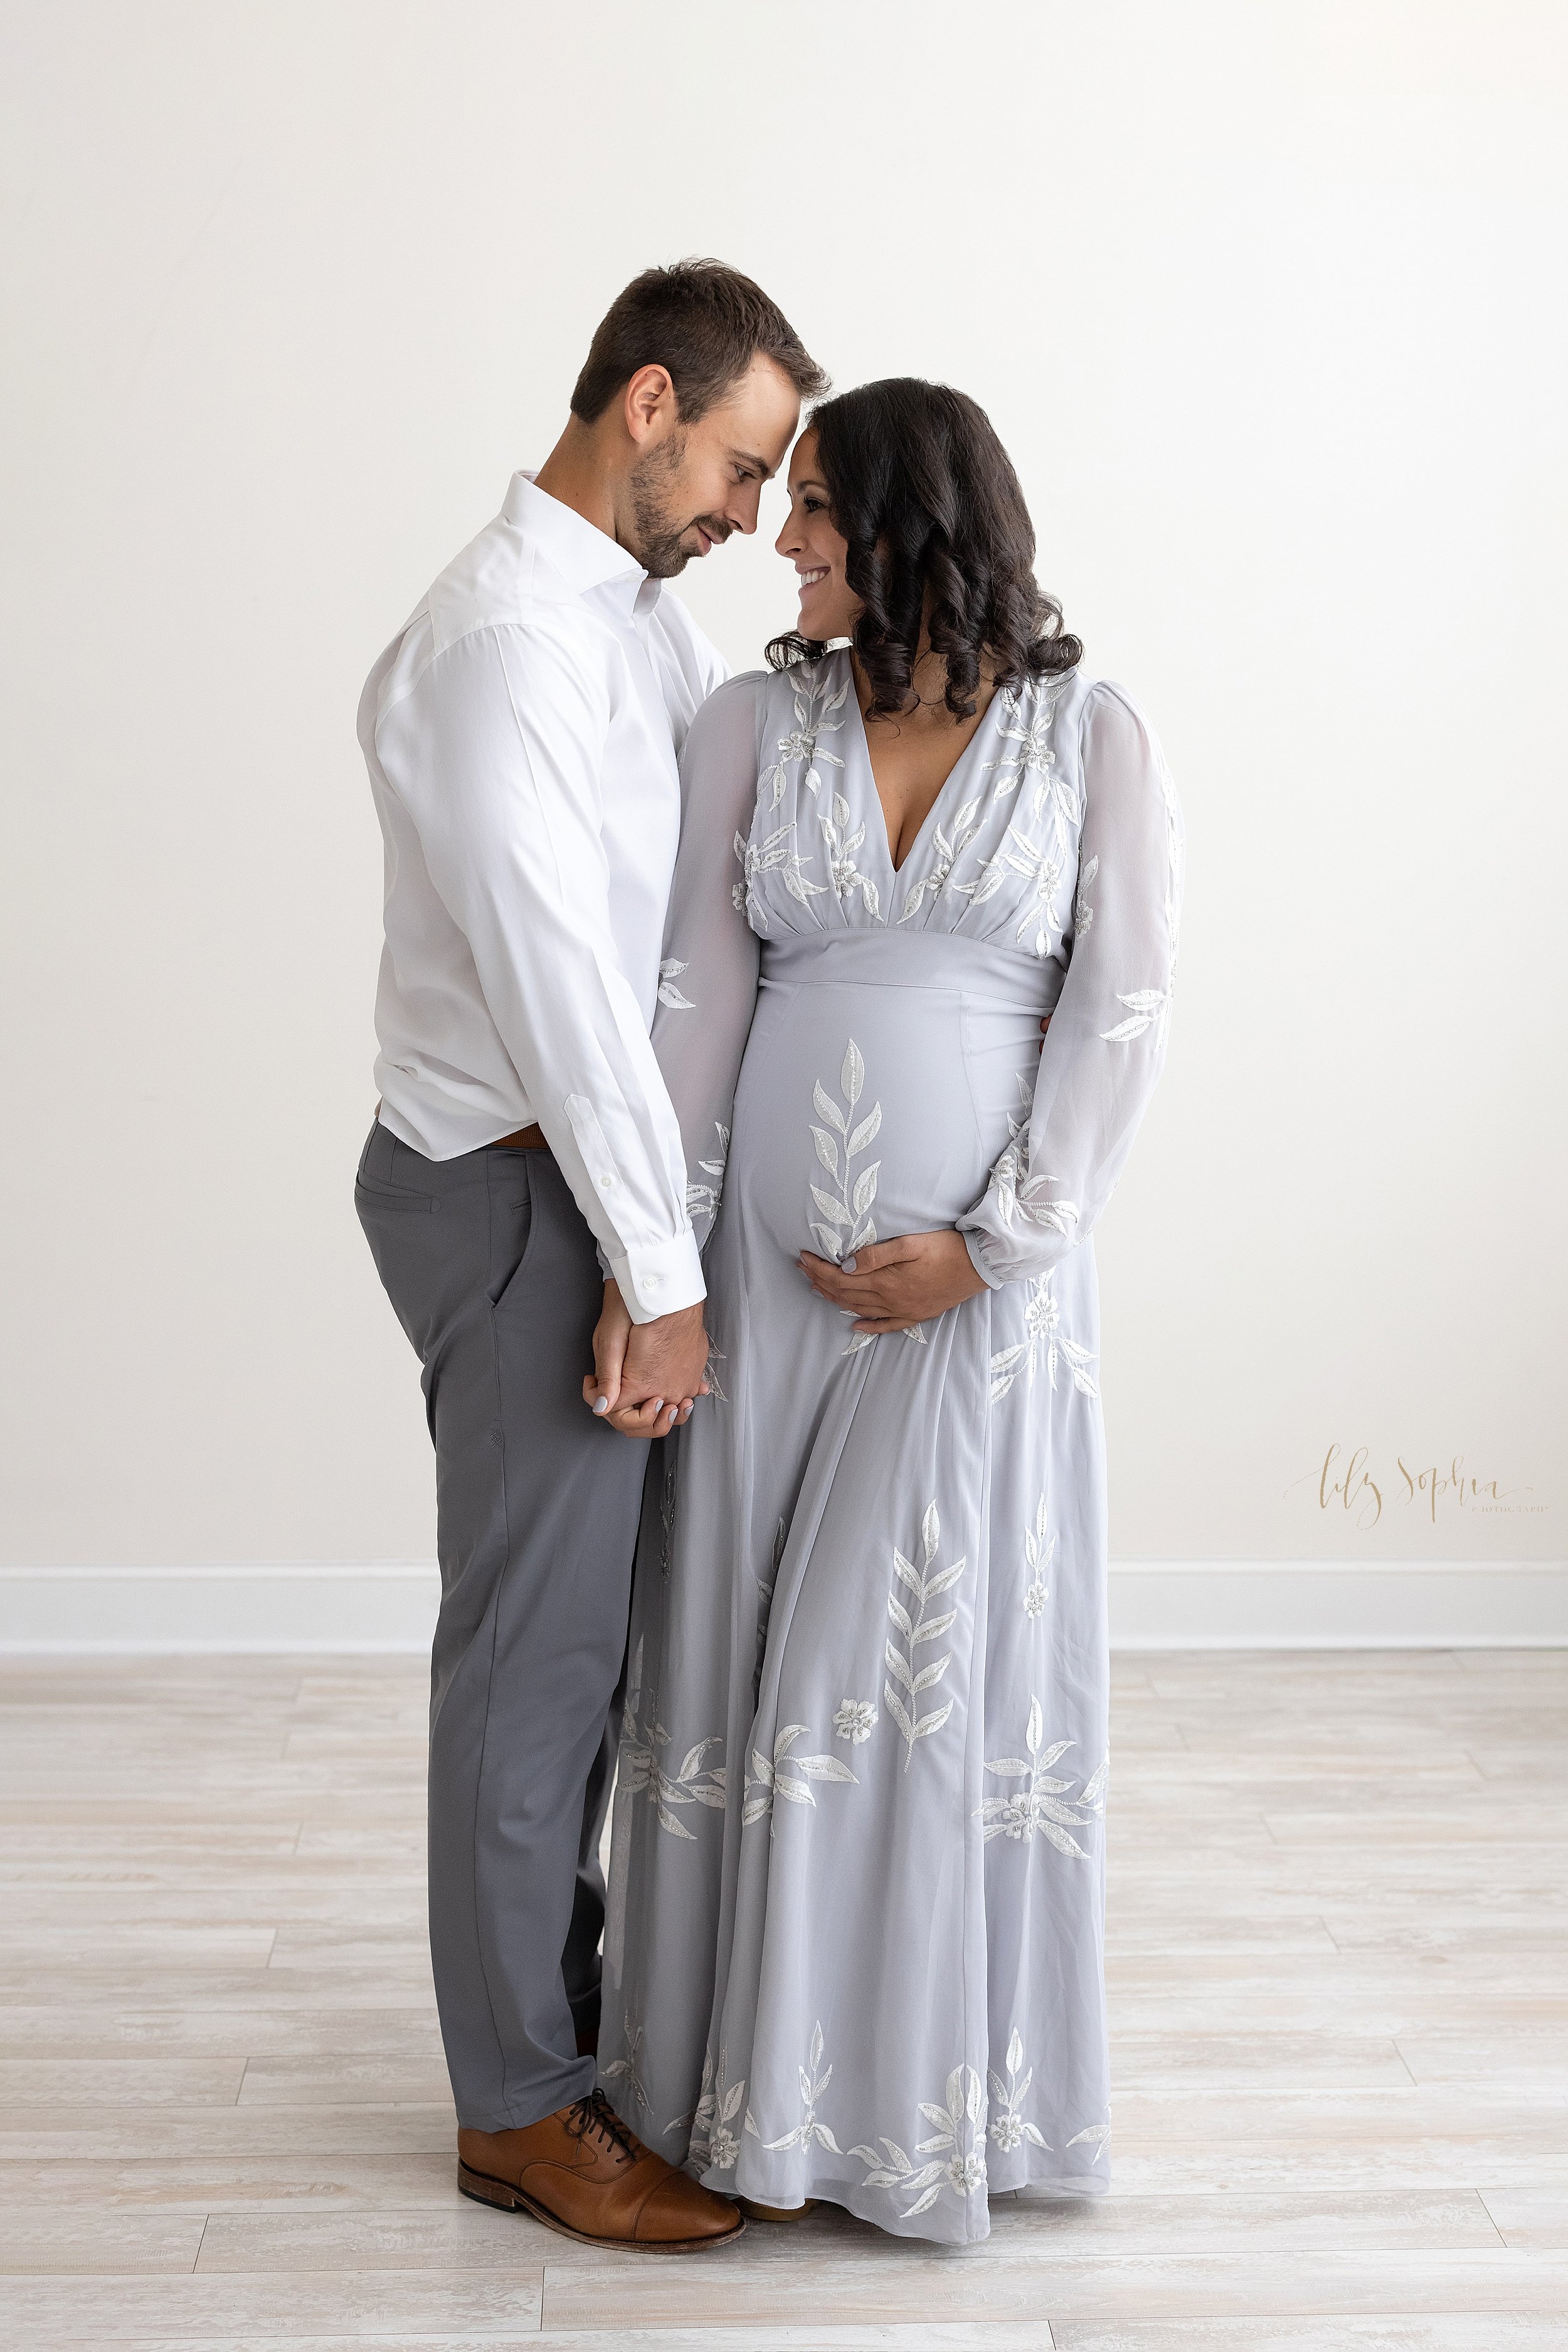 intown-atlanta-grant-park-kirkwood-decatur-buckhead-brookhaven-studio-maternity-couples-photos-expecting-baby-boy-pregnancy_0893.jpg